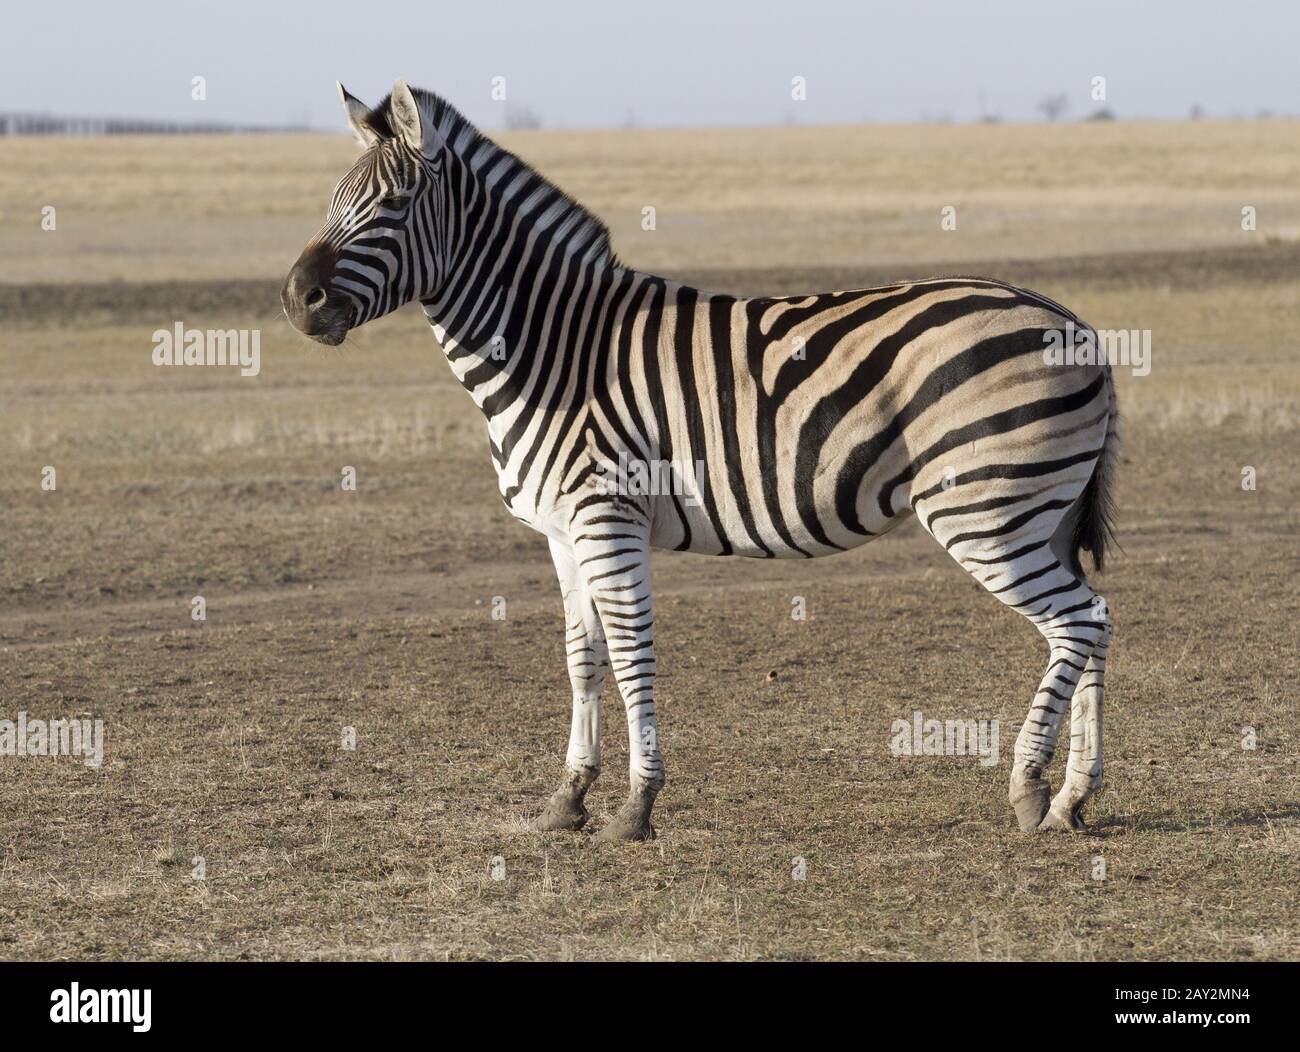 Der Zebra Chapman im Herbst steppt. Stockfoto